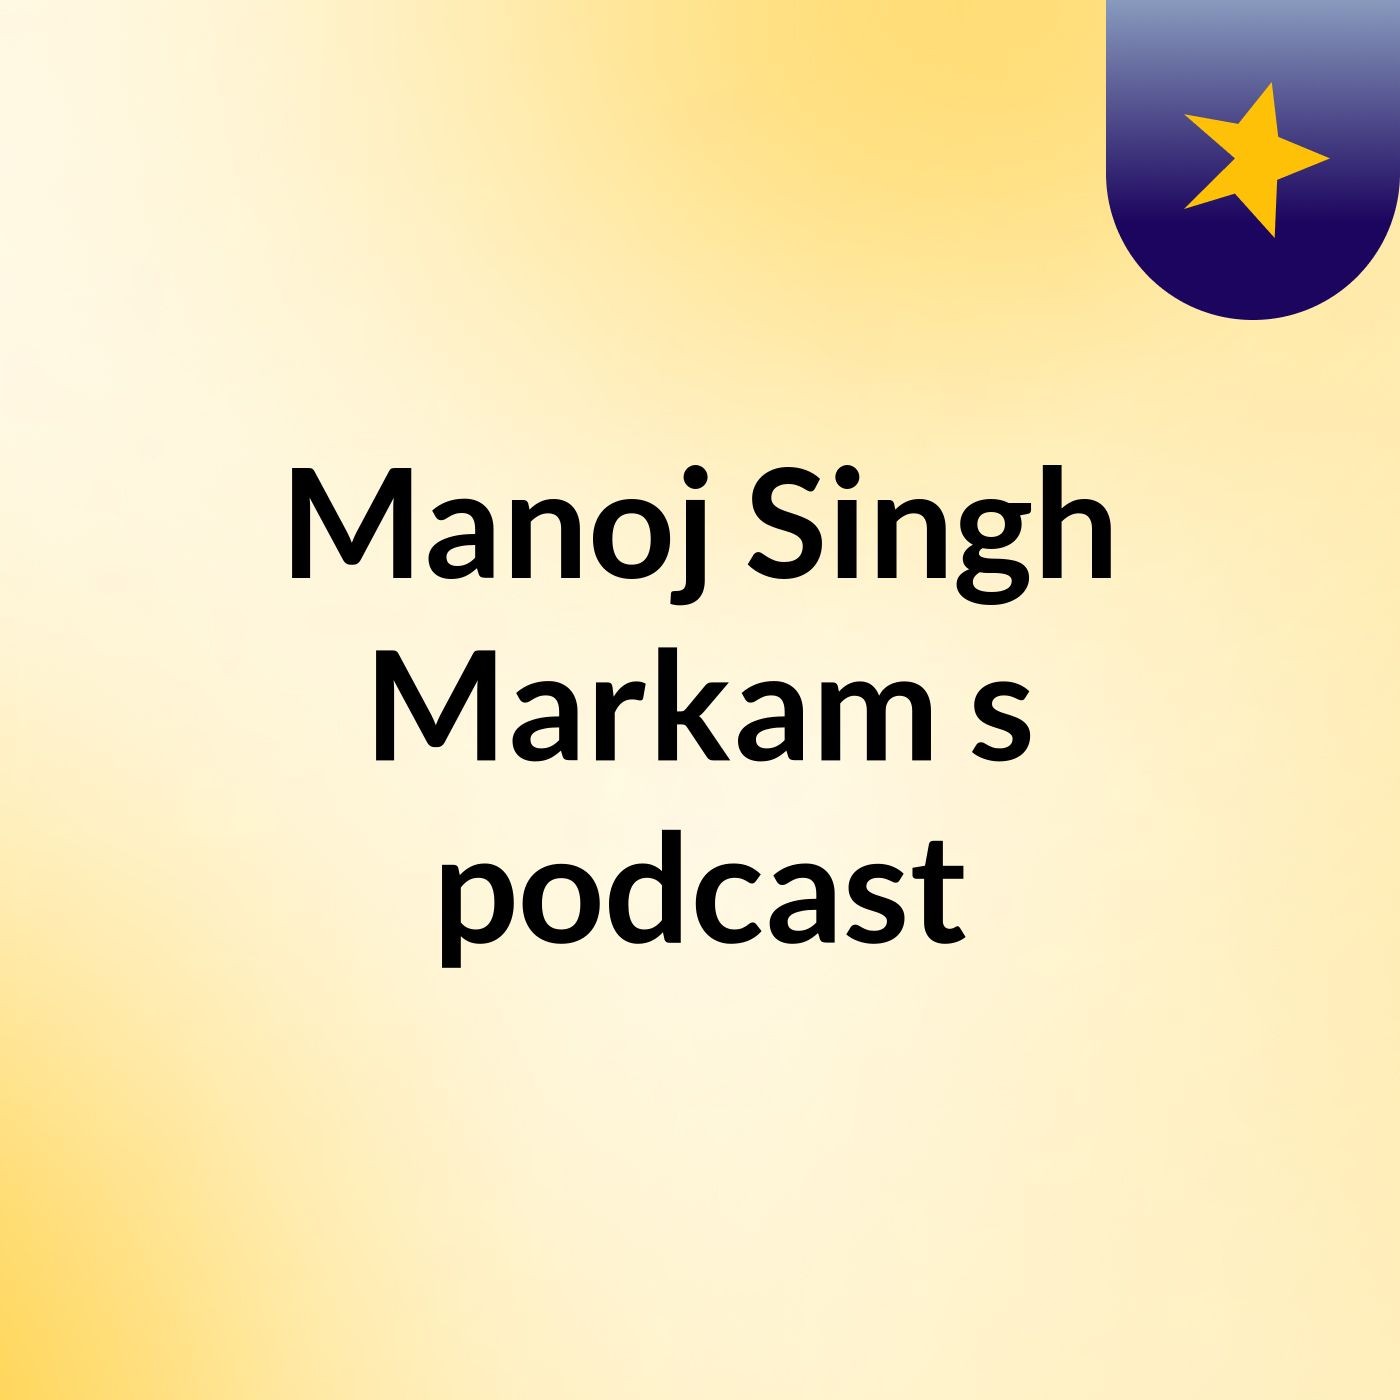 Manoj Singh Markam's podcast